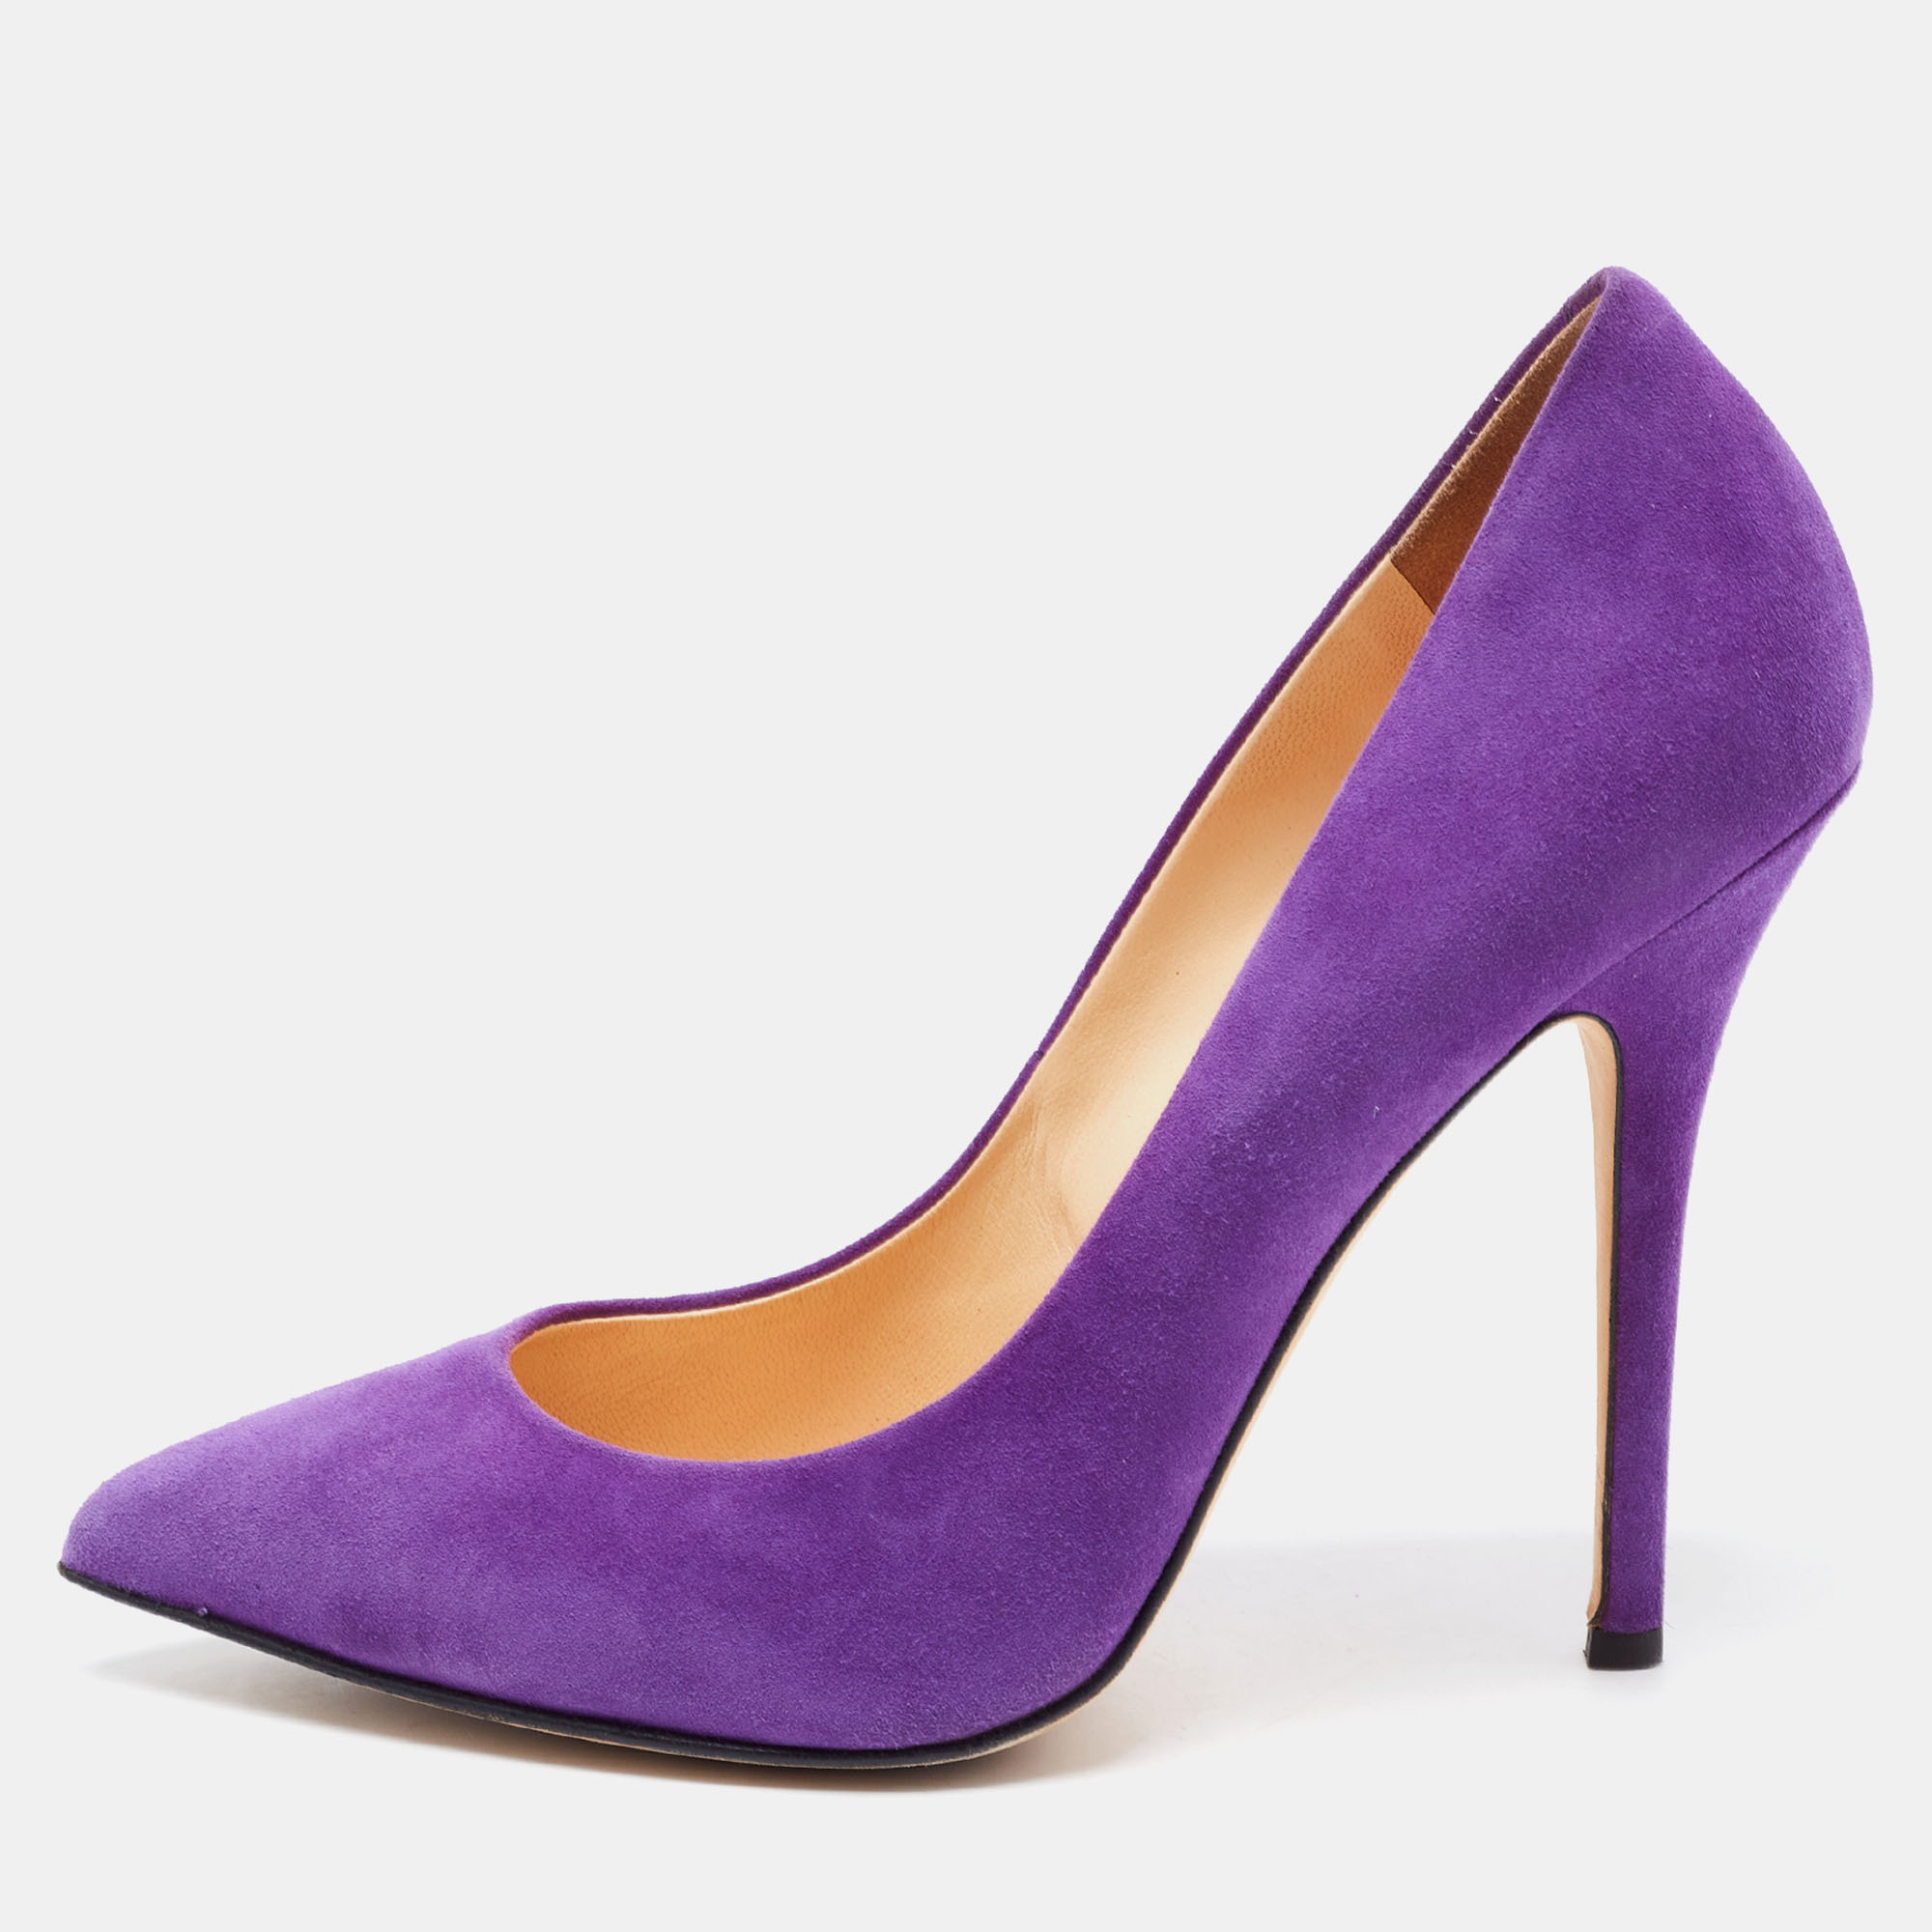 Giuseppe Zanotti Purple Suede Pointed Toe Pumps Size 38.5